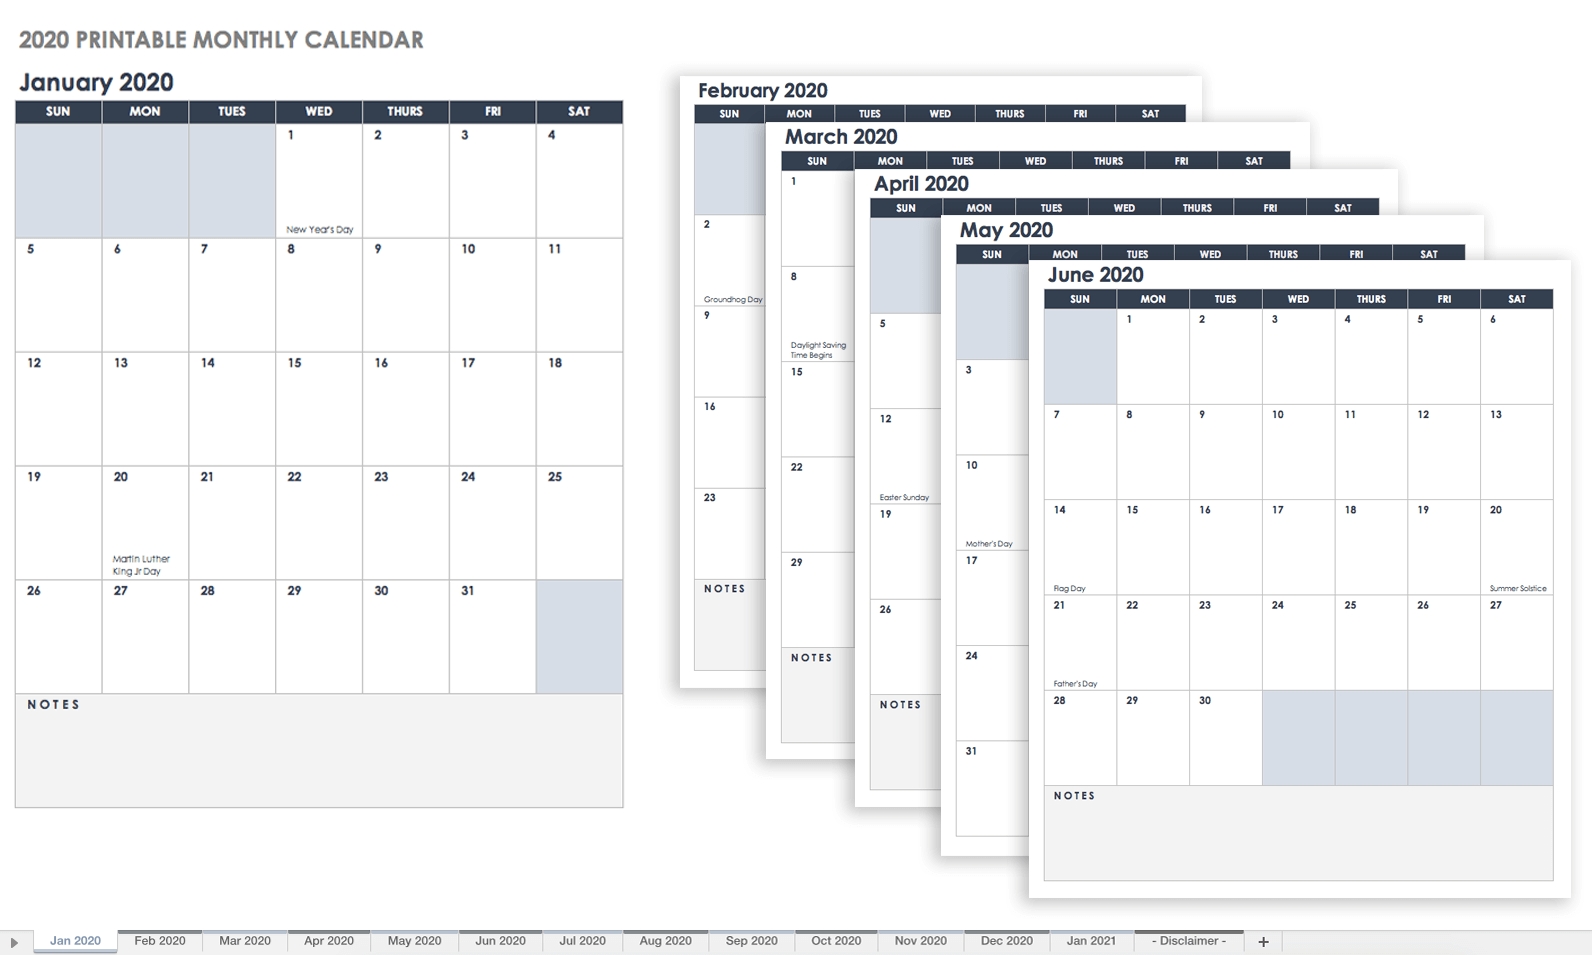 15 Free Monthly Calendar Templates | Smartsheet Tamil Calendar 2020 January